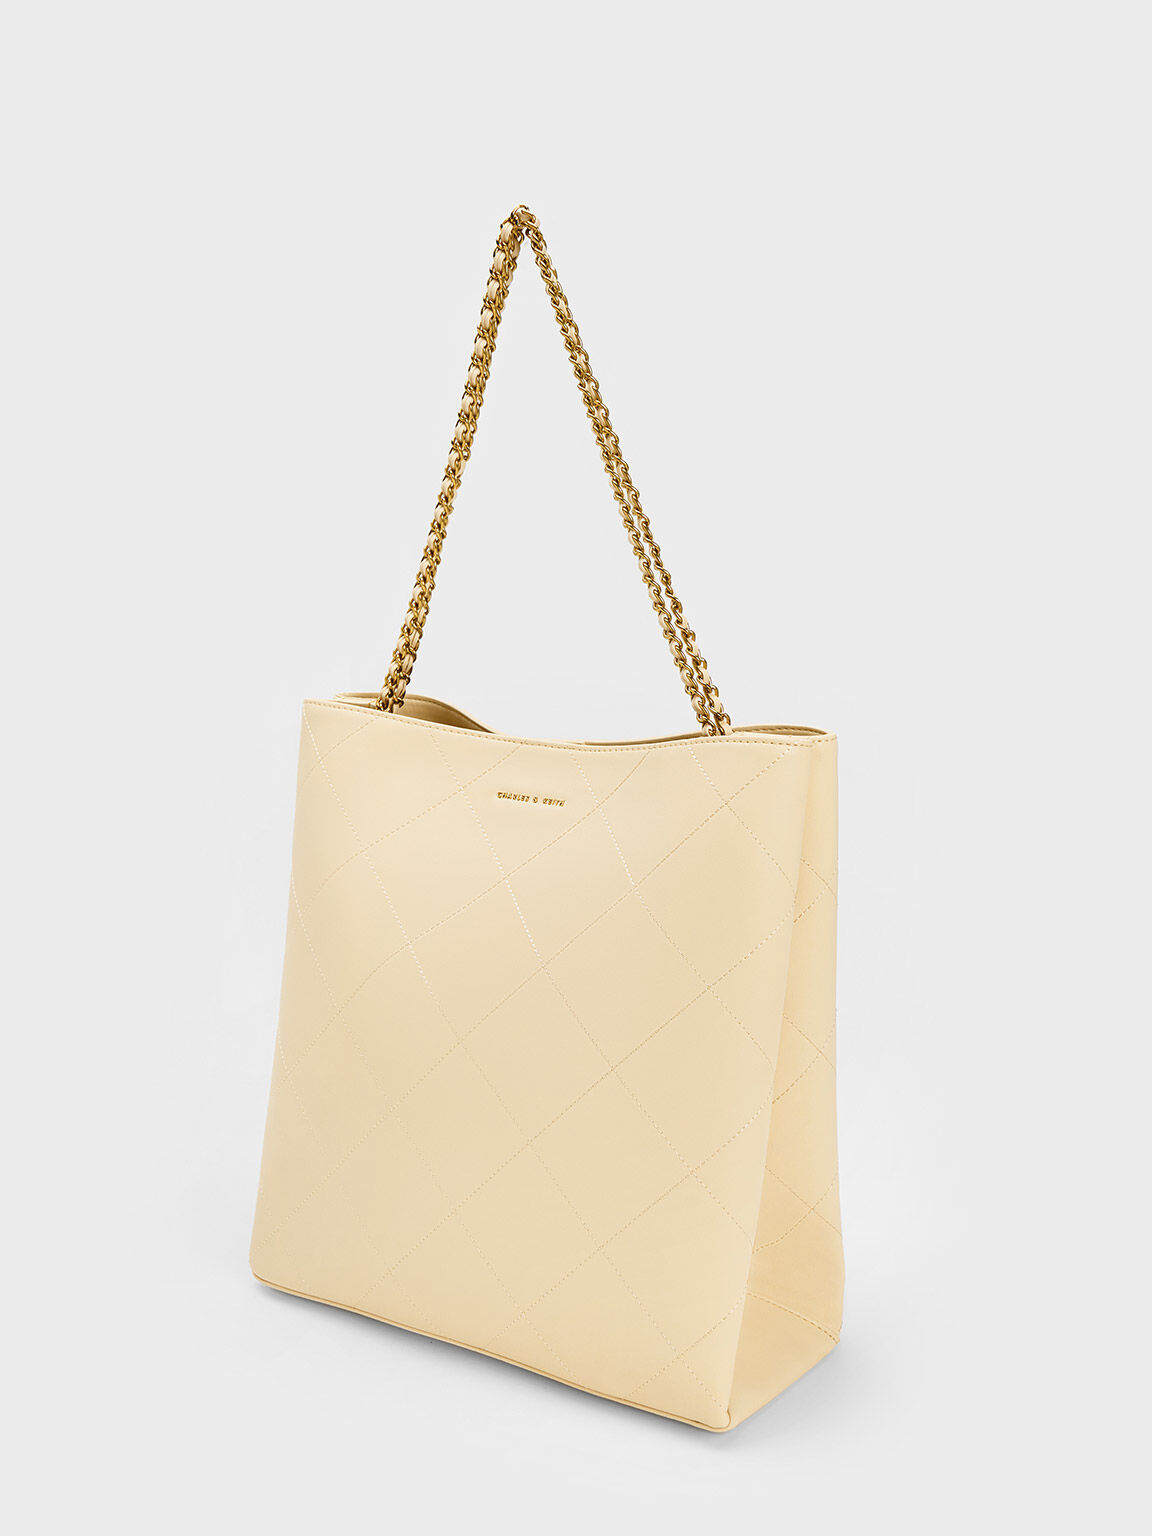 Charles & Keith - Women's Braided Bag Strap, Beige, R